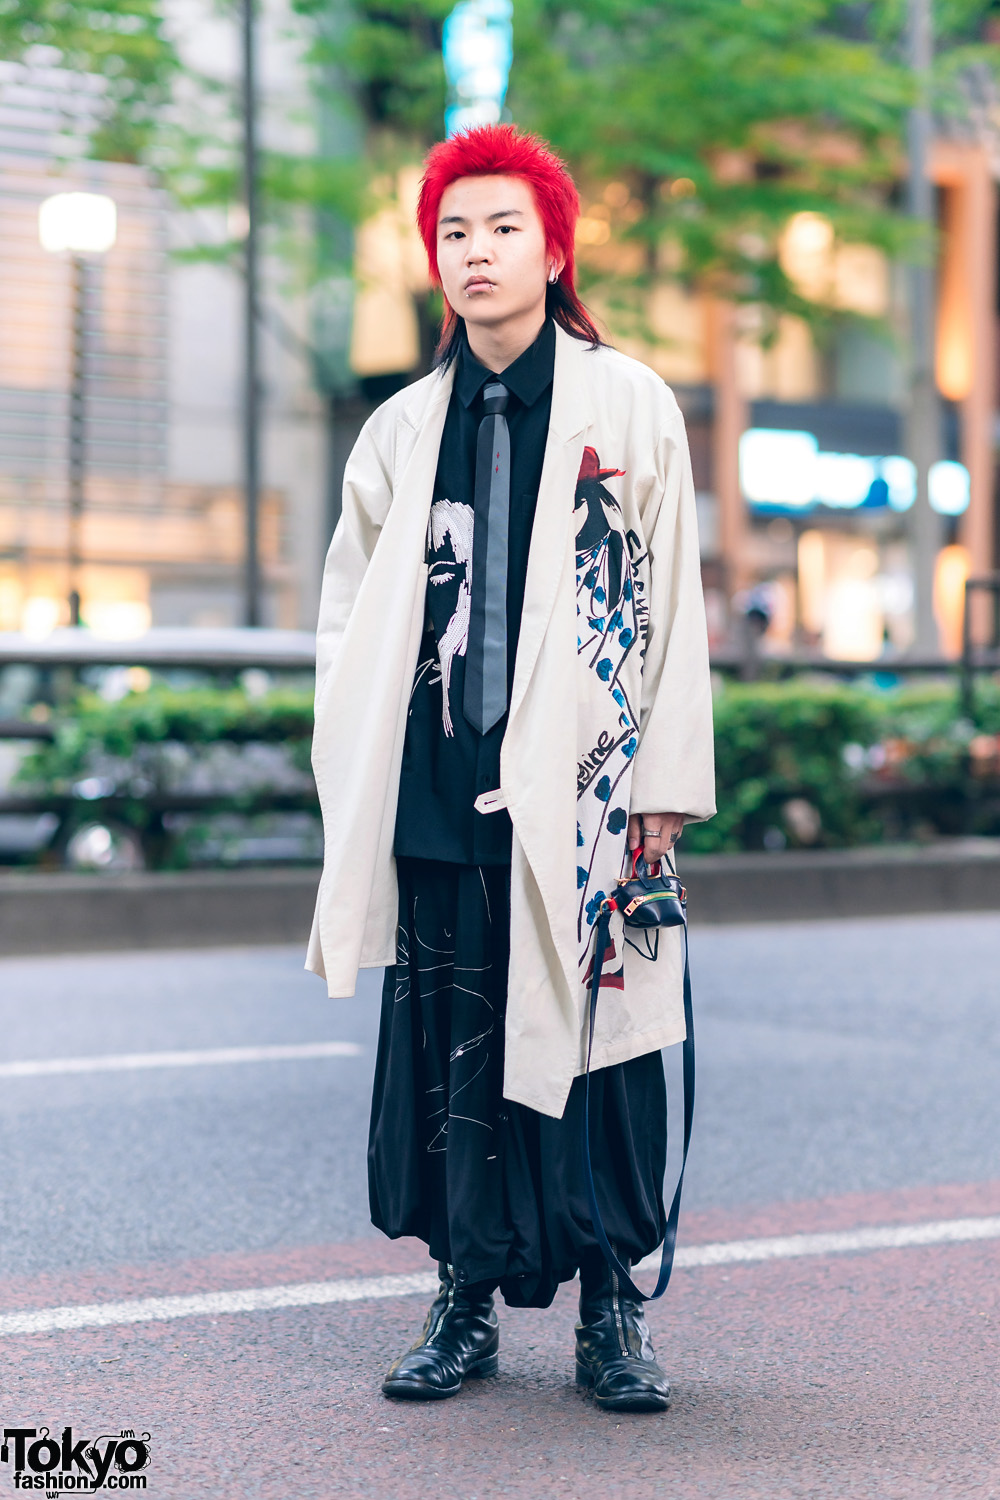 Yohji Yamamoto Tokyo Street Style w/ Red Mullet Hairstyle, Painted Coat ...